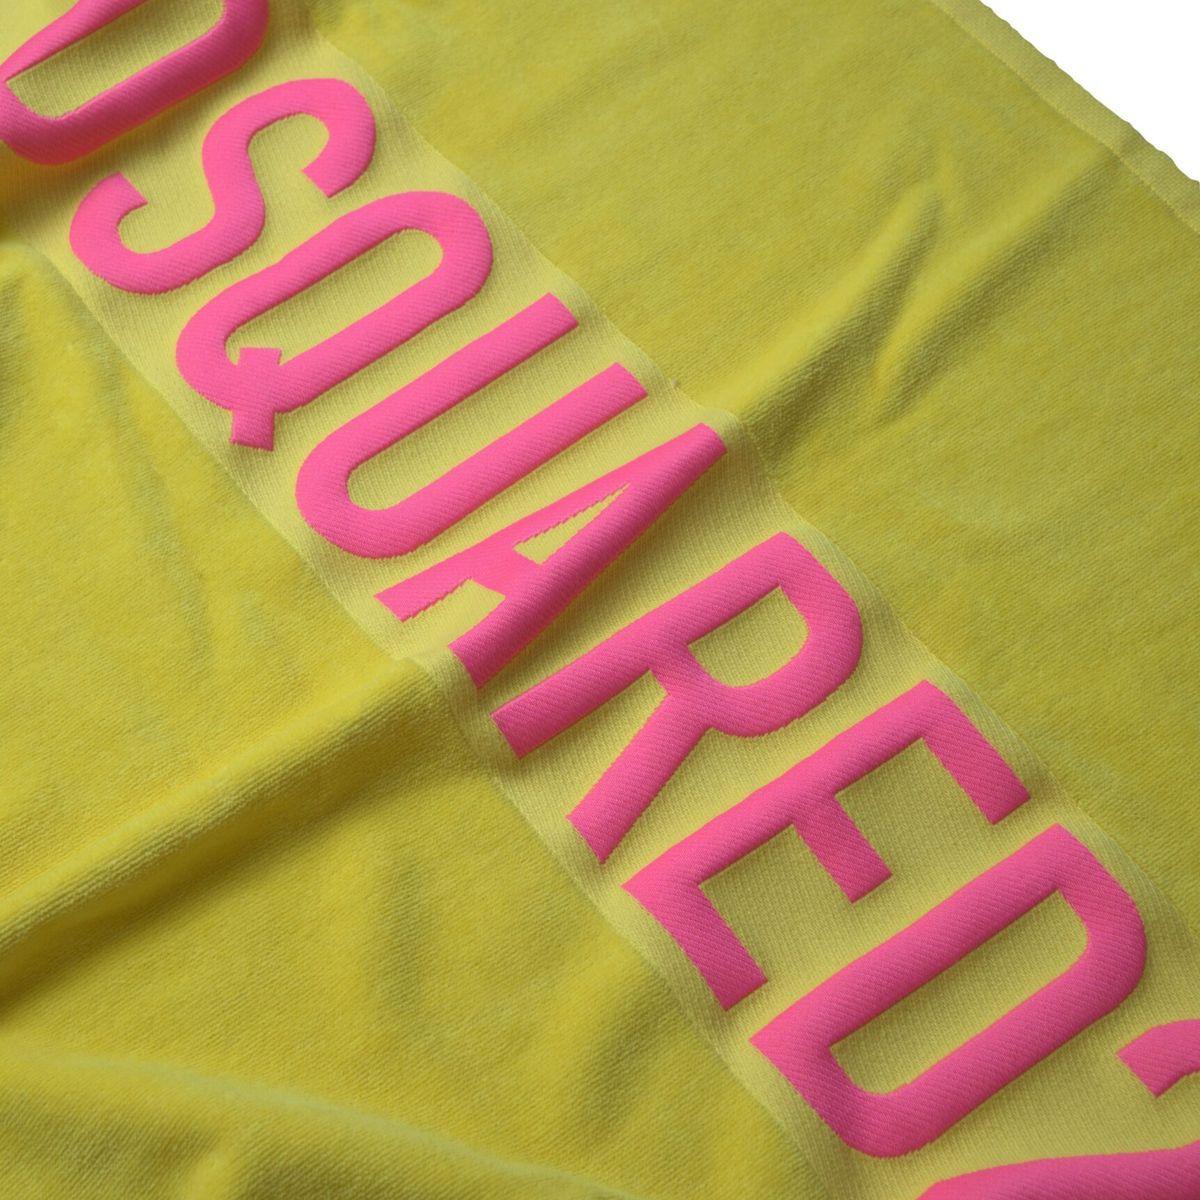 Dsquared² Sunshine Yellow Logo Beach Towel yellow-logo-print-cotton-soft-unisex-beach-towel 465A4241-scaled-8b8ec12f-e0a_84c9be47-935d-4db7-b71a-e80d57e909cf.jpg